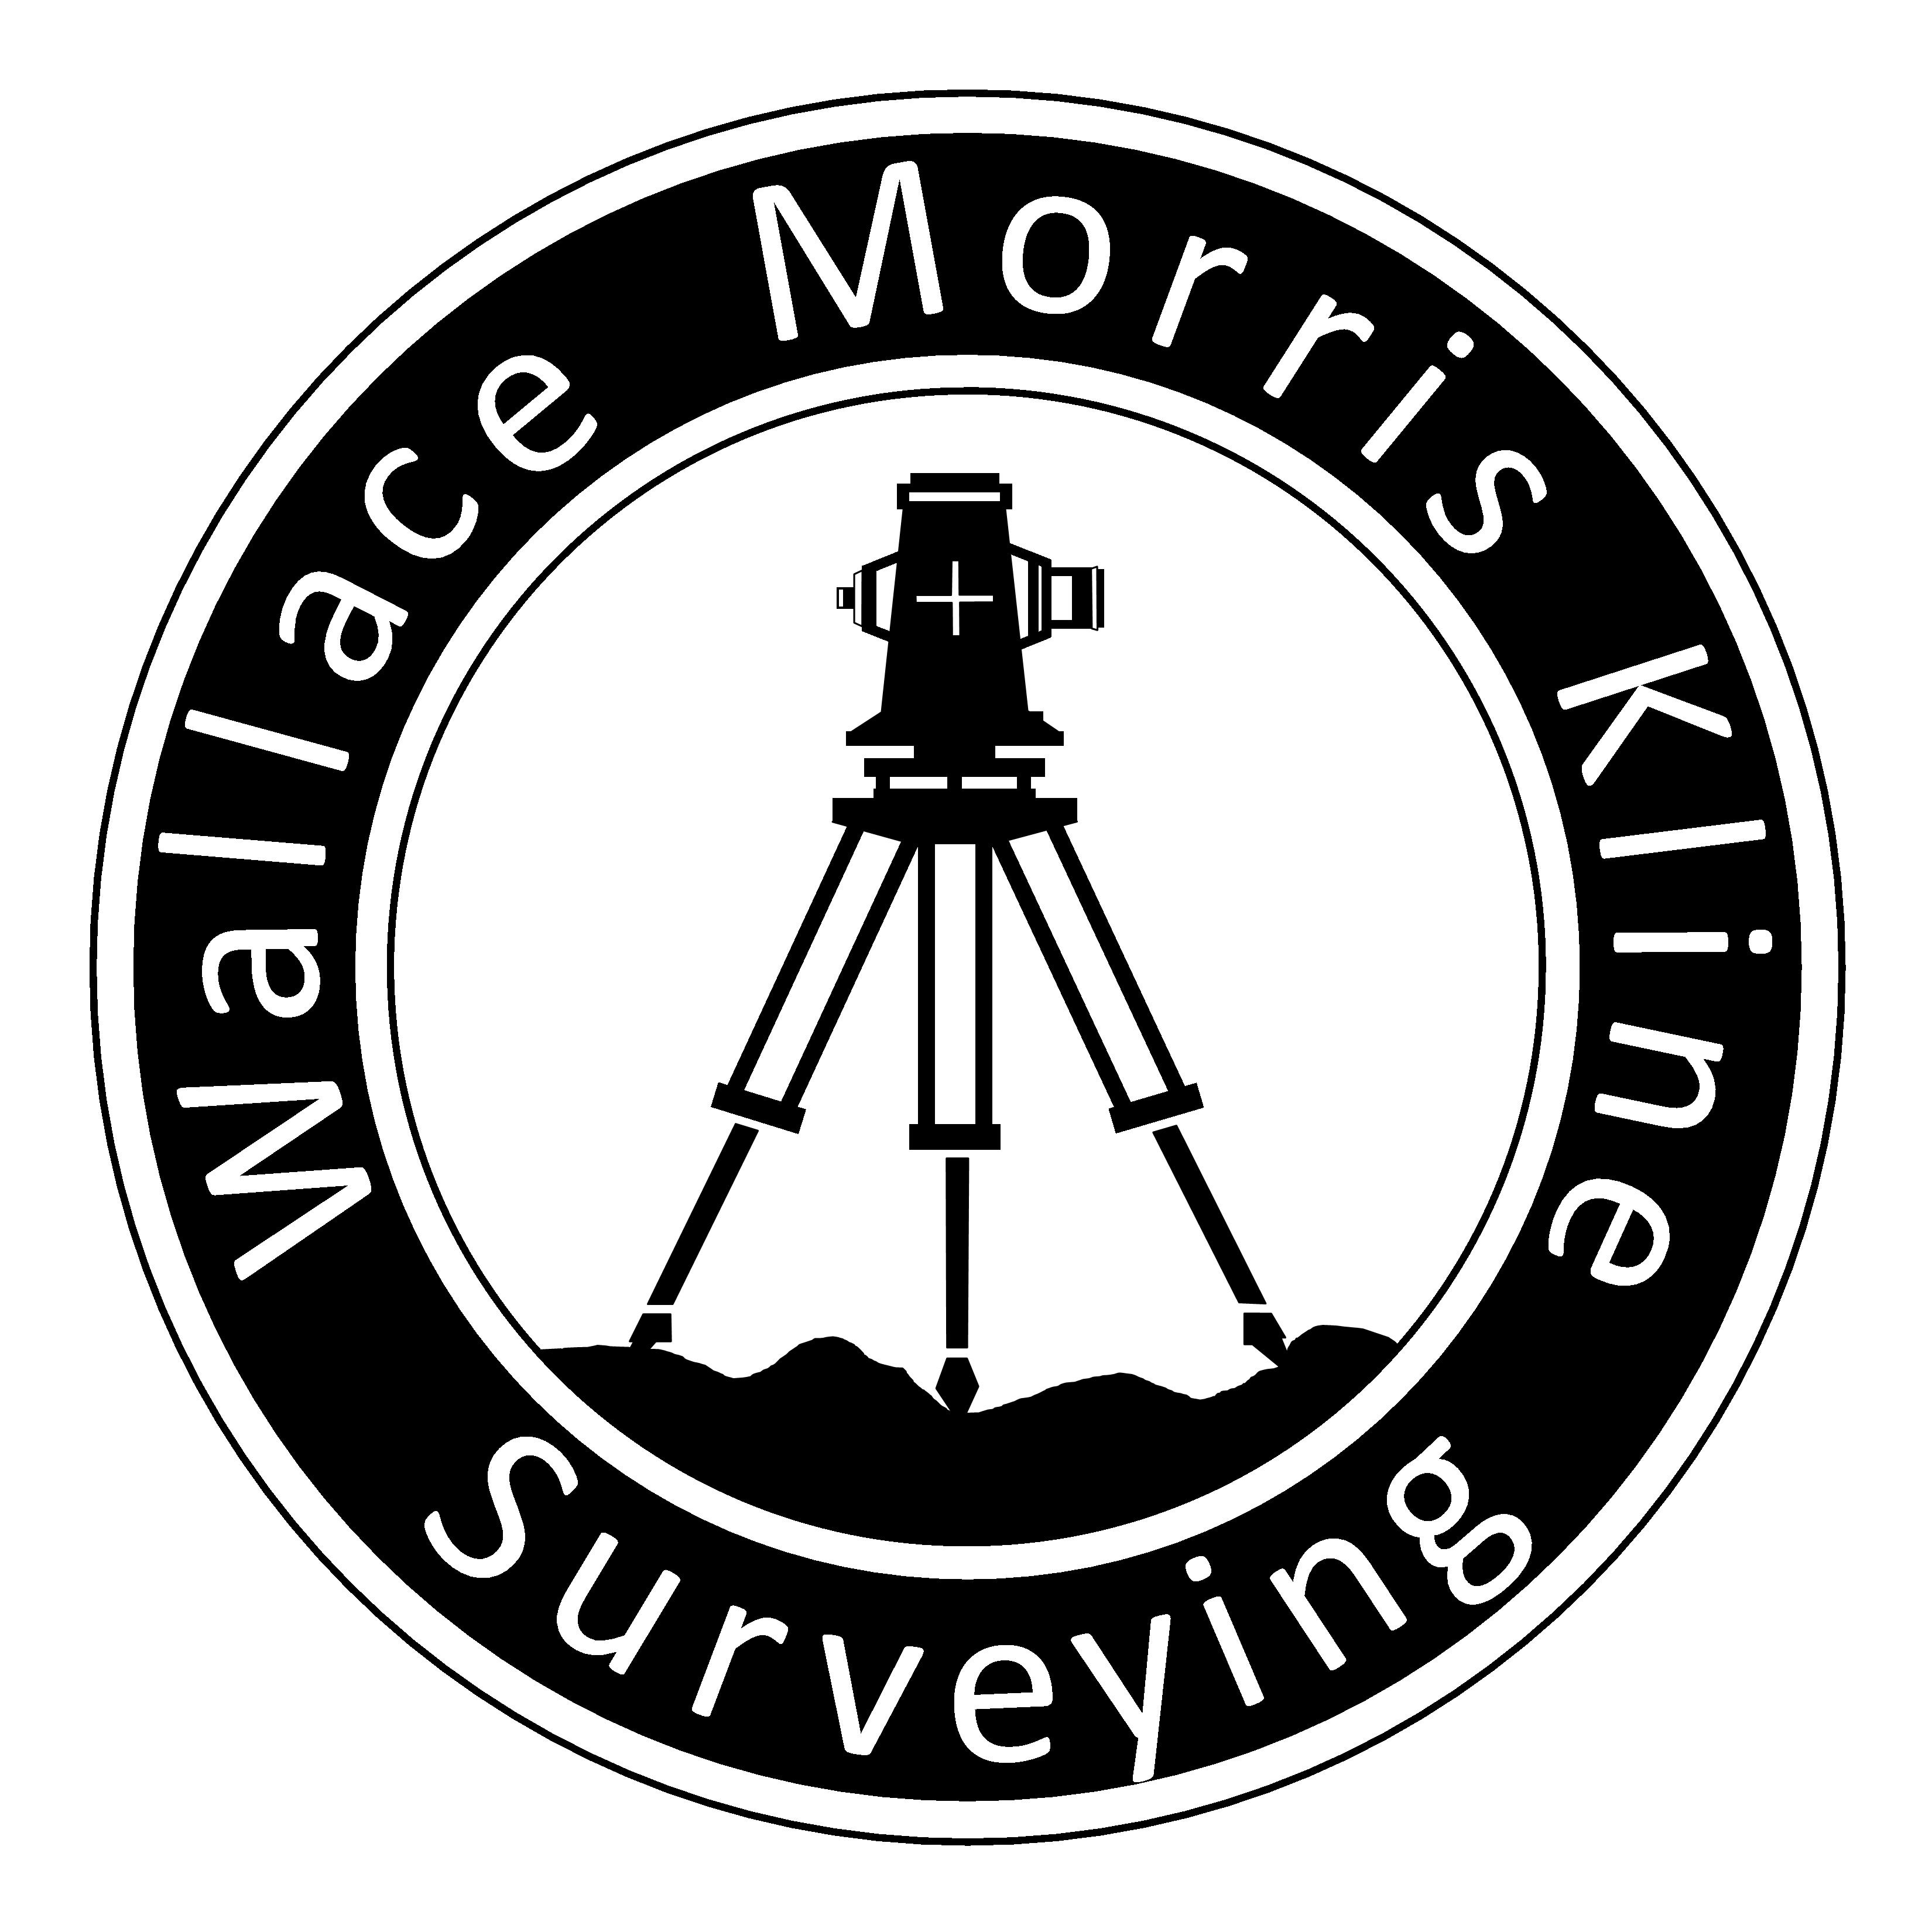 Silver Sponsor WMK Surveying